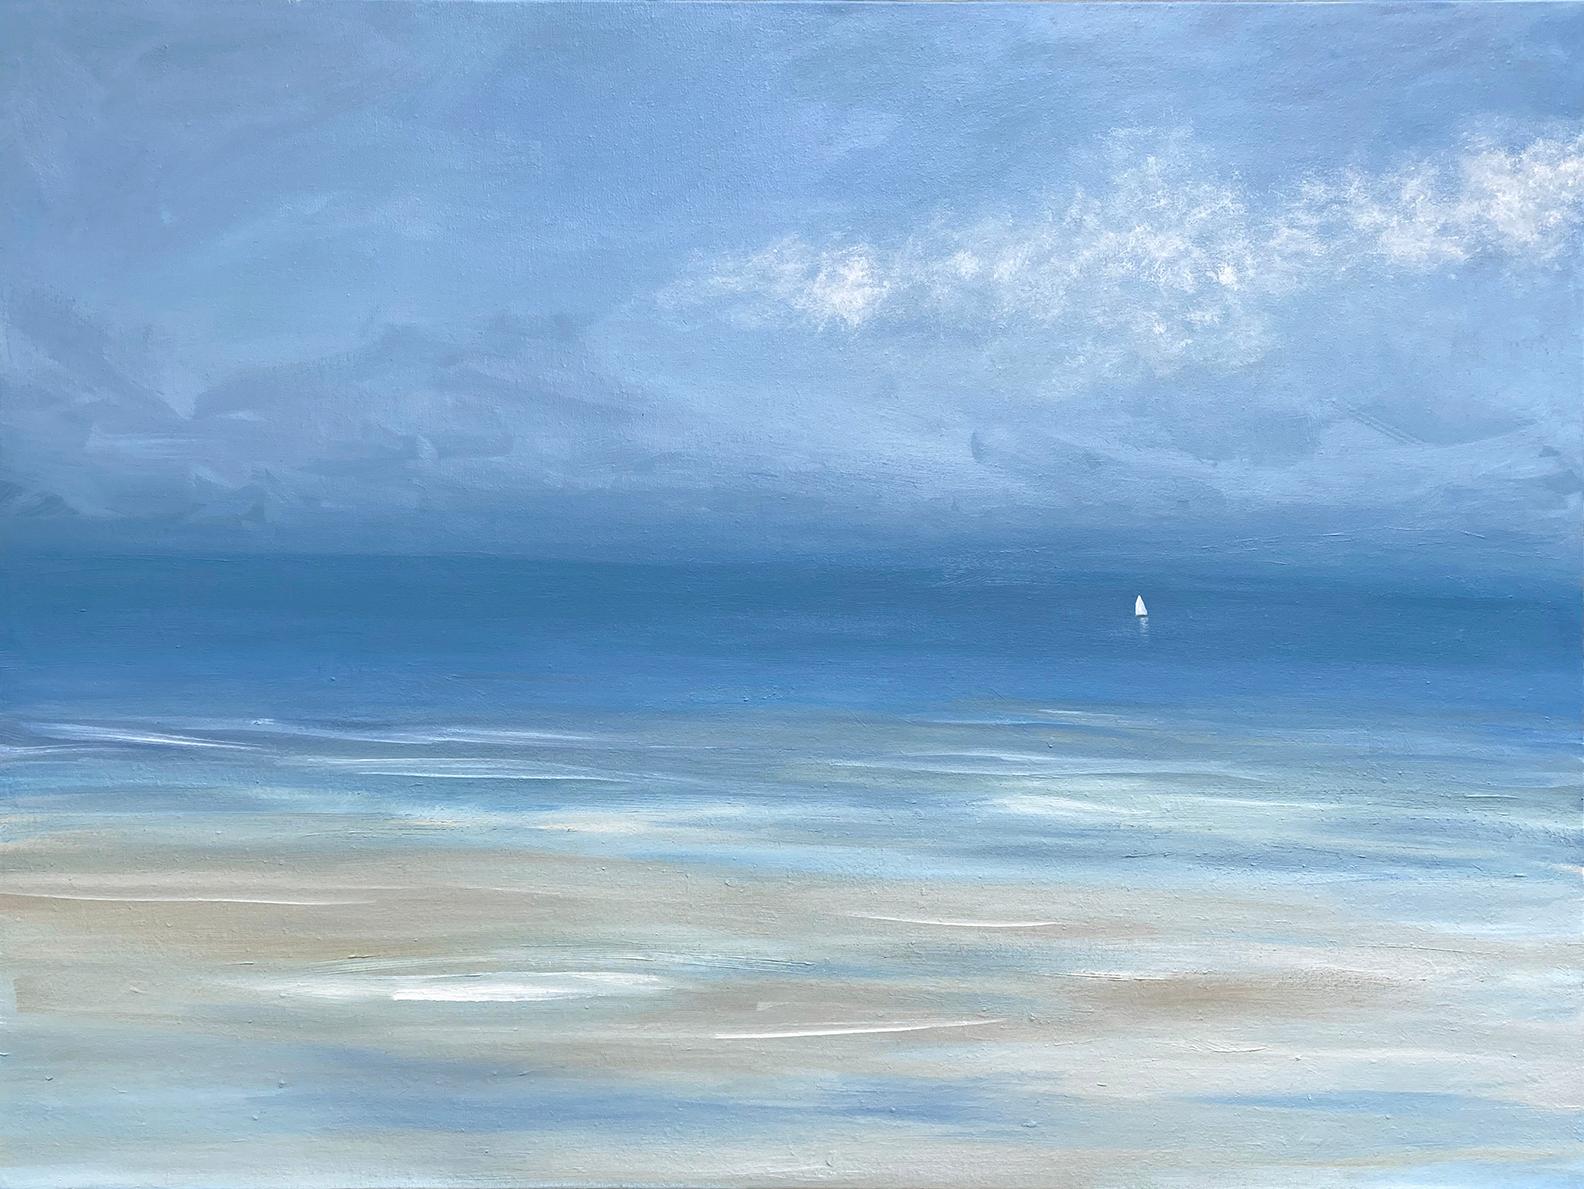 S. Cora Aldo Landscape Painting - "Calm Waters, " Contemporary Seascape Painting